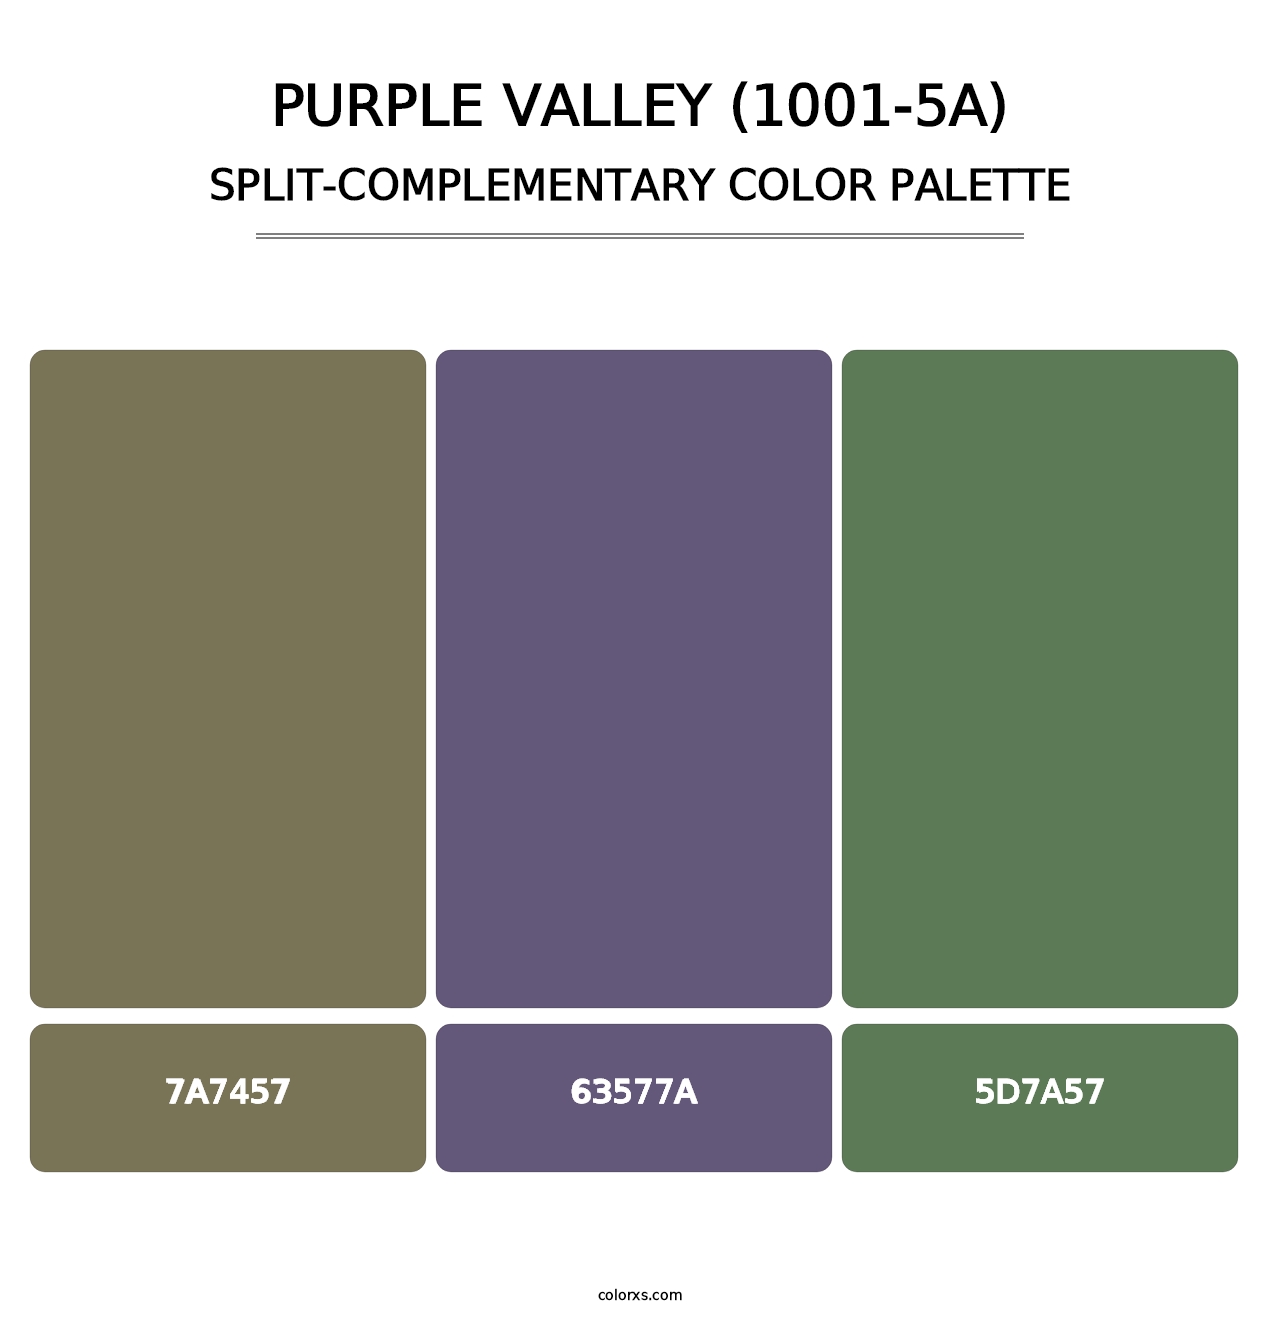 Purple Valley (1001-5A) - Split-Complementary Color Palette